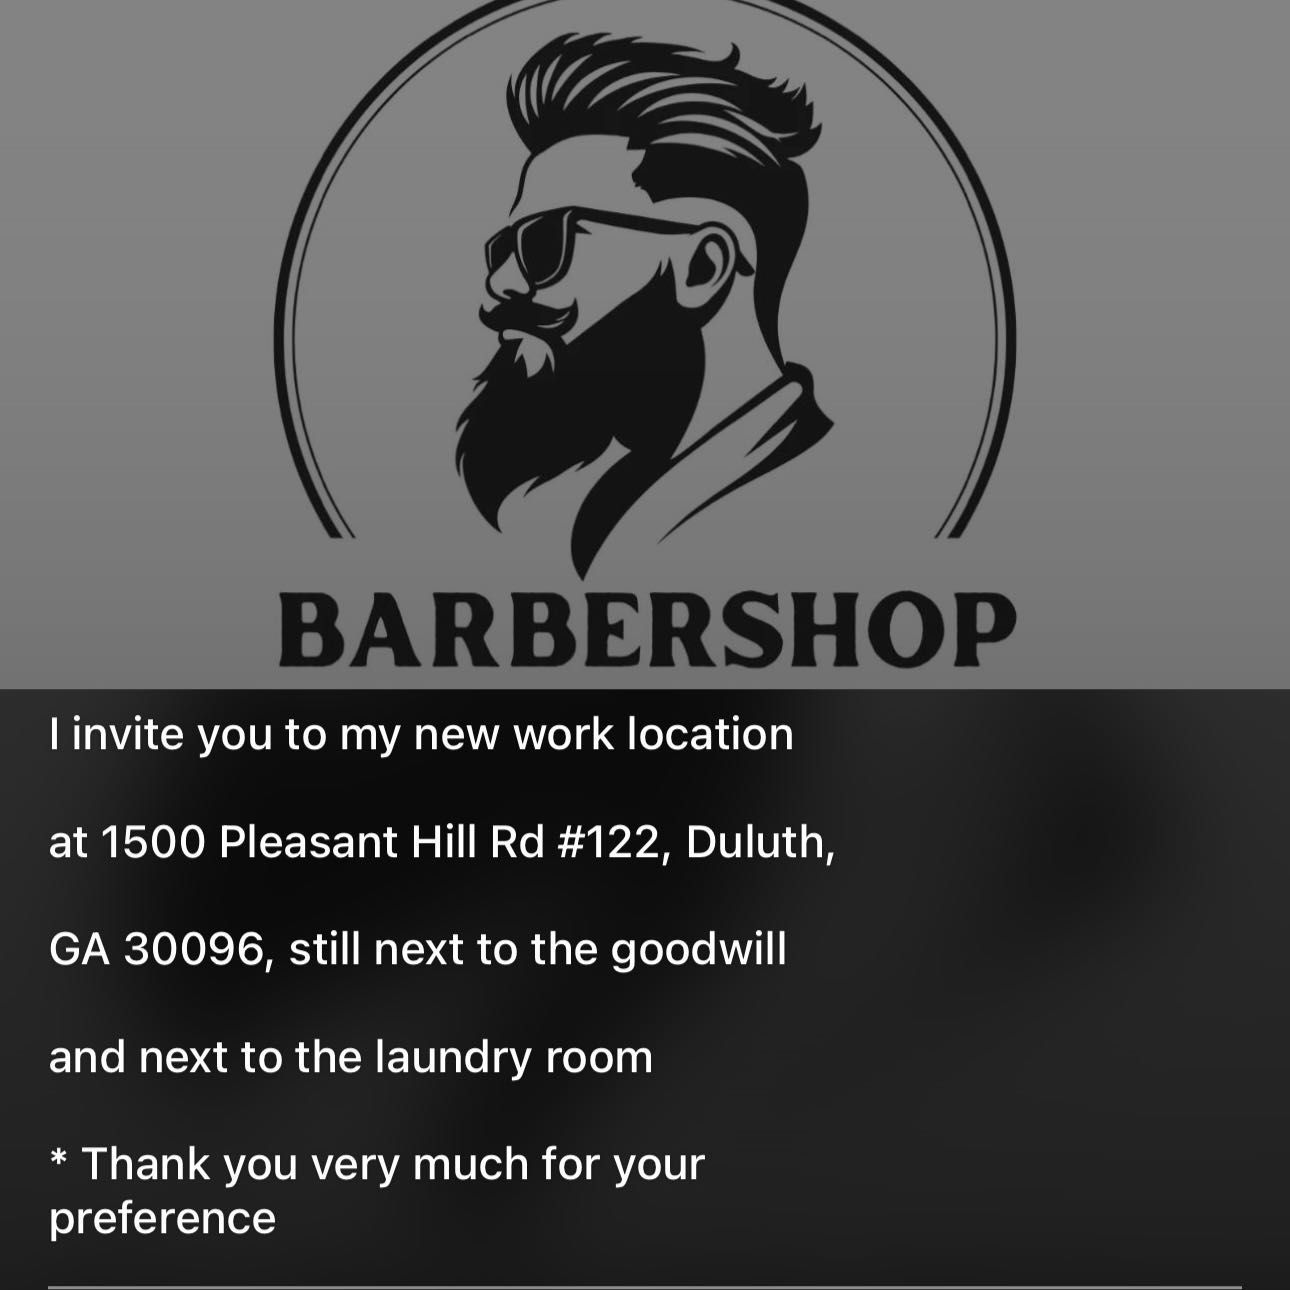 Barber shop Walo’s, 1500 Pleasant Hill Rd, 1500 Pleasant Hill Rd #122, Duluth, GA 30096,, Duluth, 30096